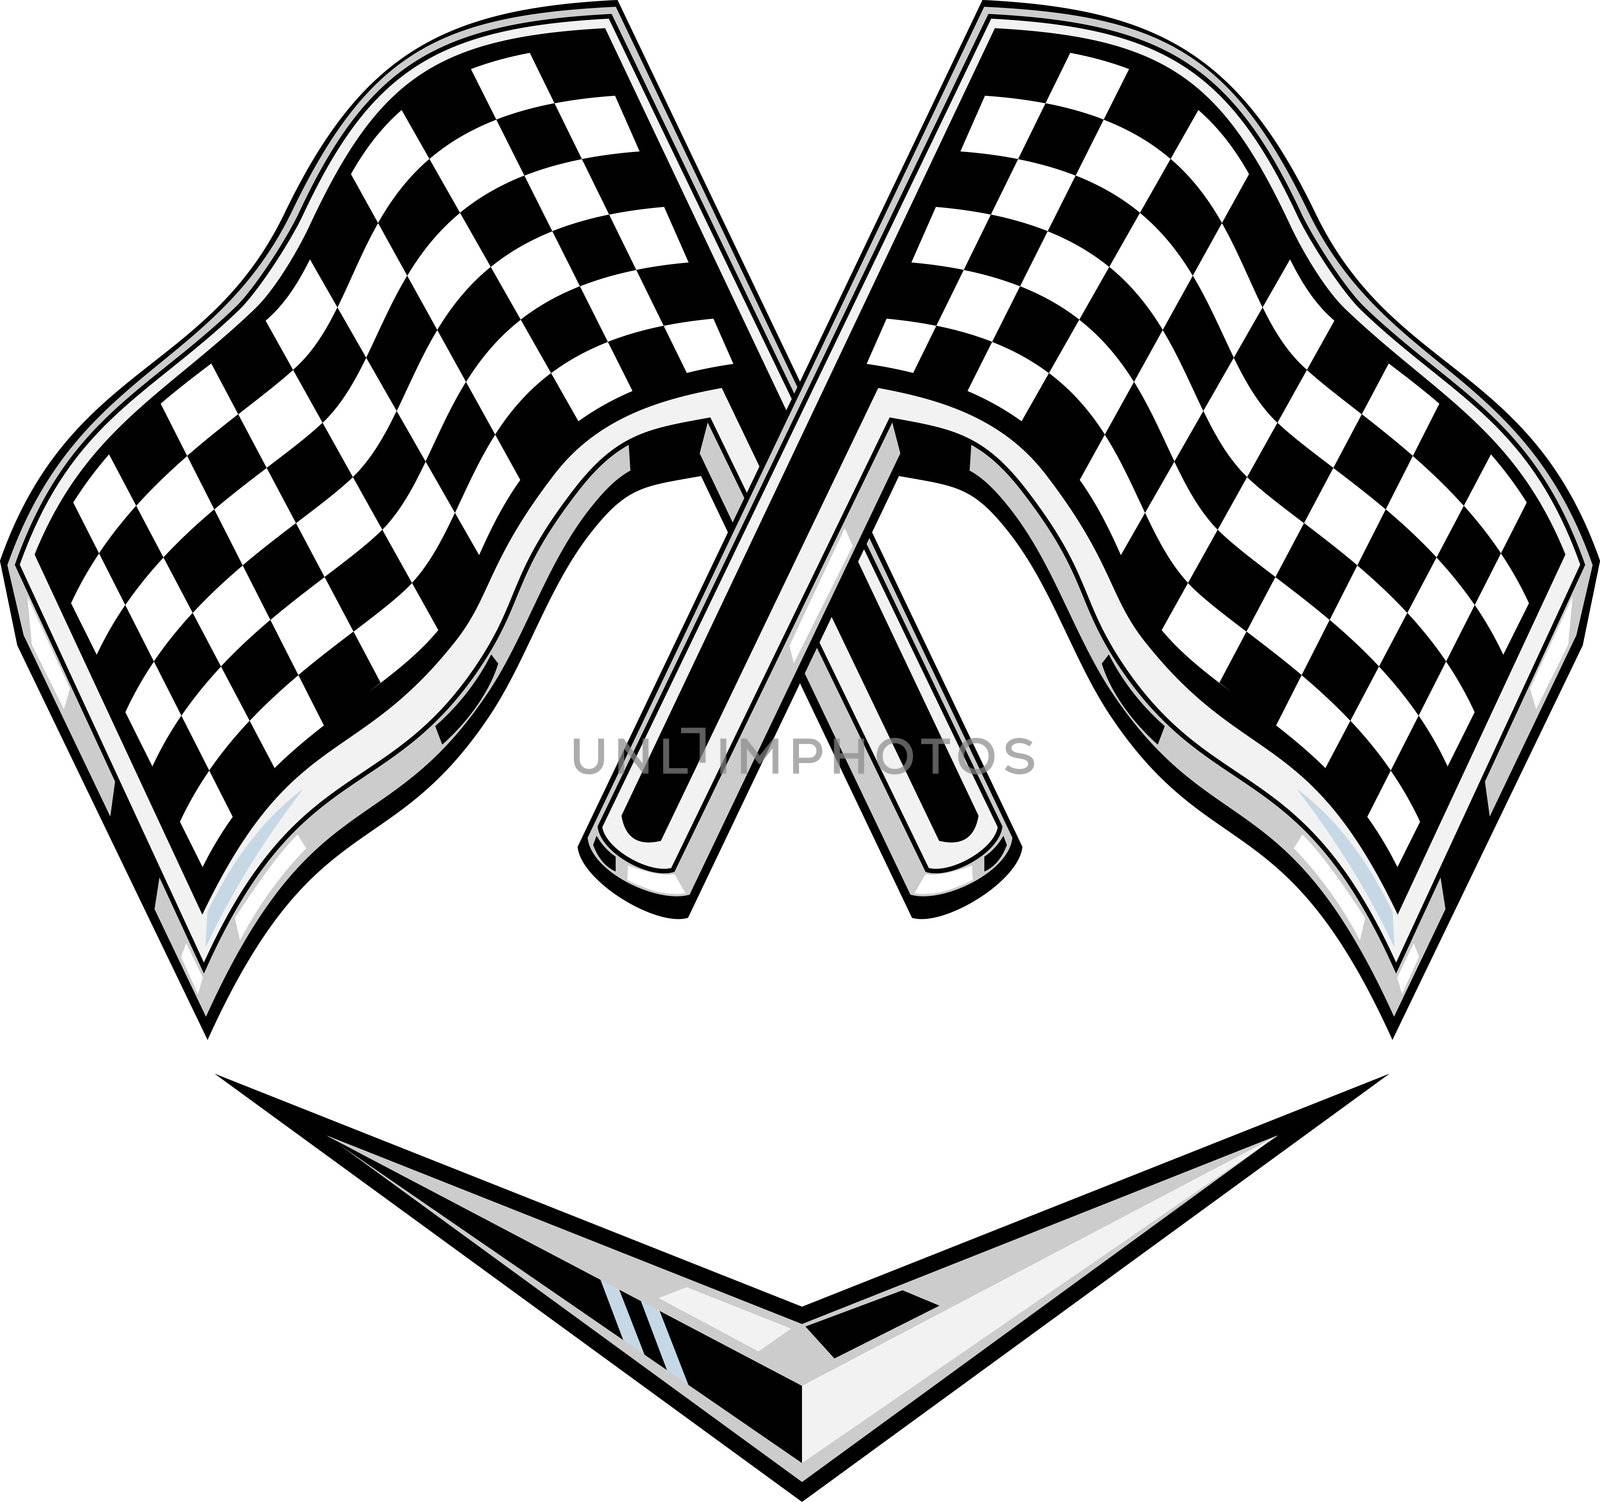 metallic racing checkered flag crossed by patrimonio